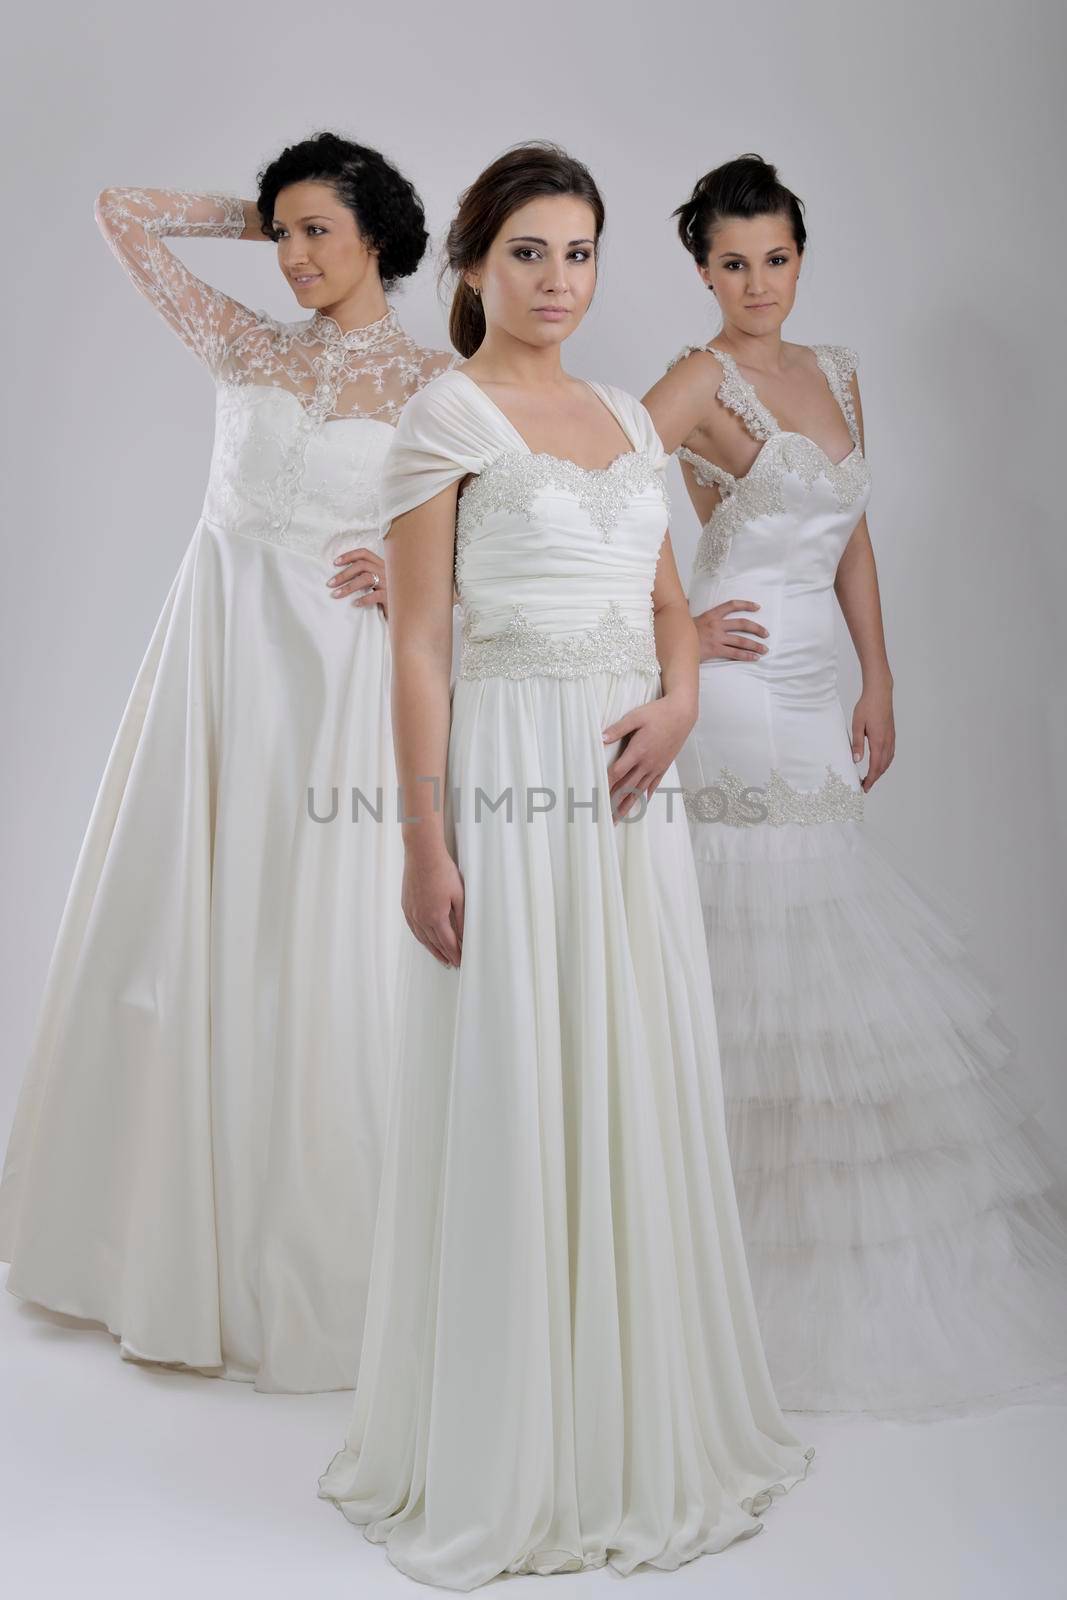 portrait of a three beautiful woman in wedding dress by dotshock